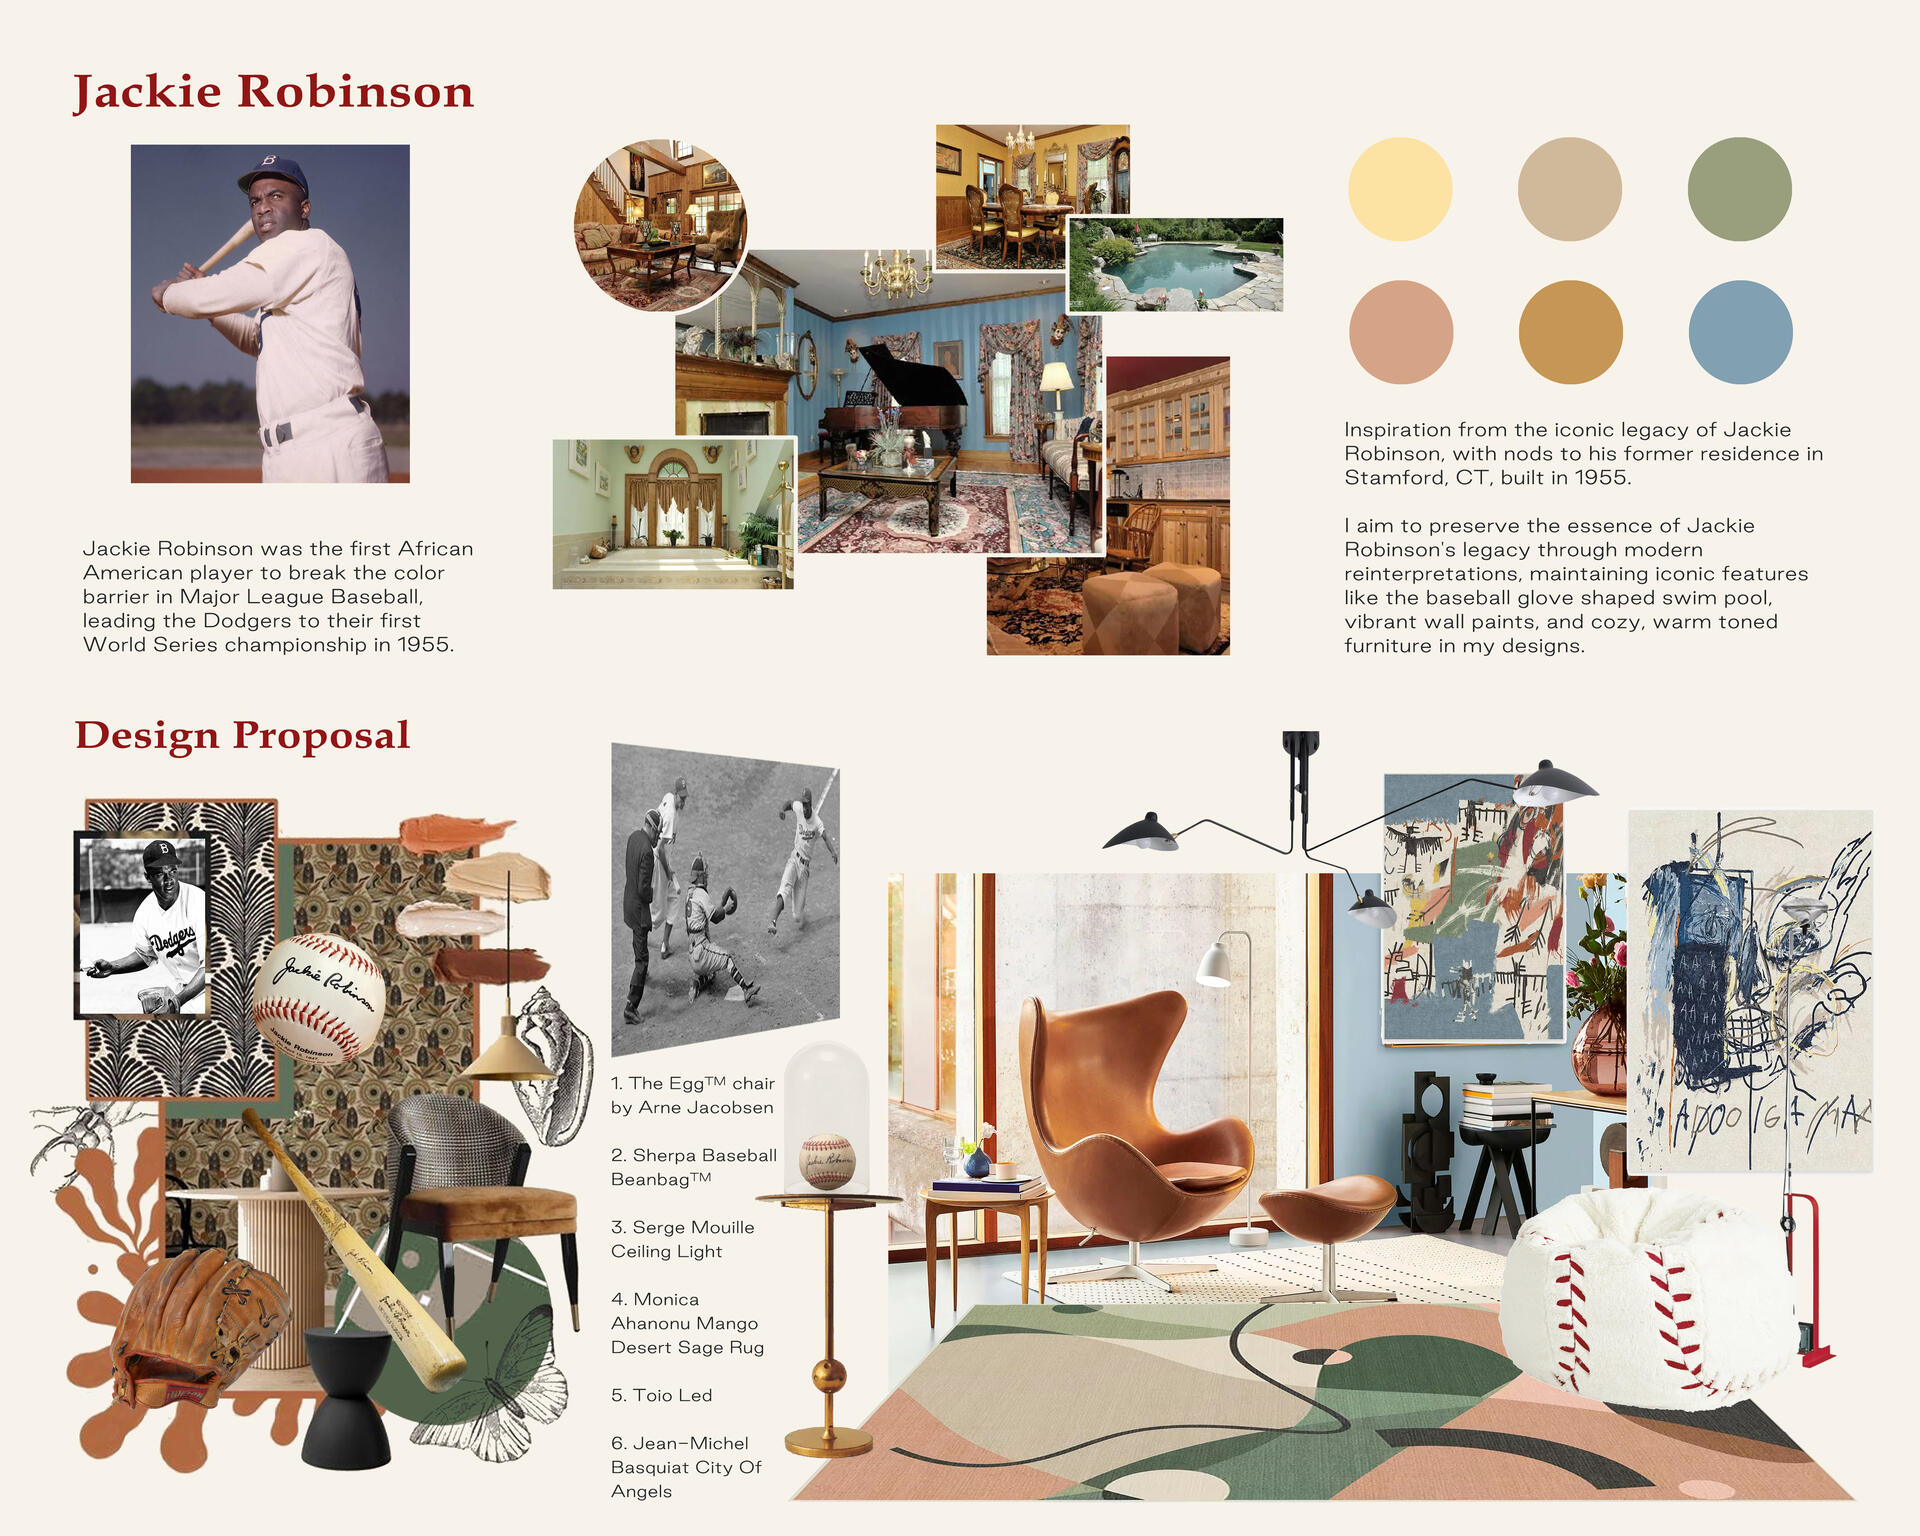  Jackie Robinson Inspired Interior Design Proposal